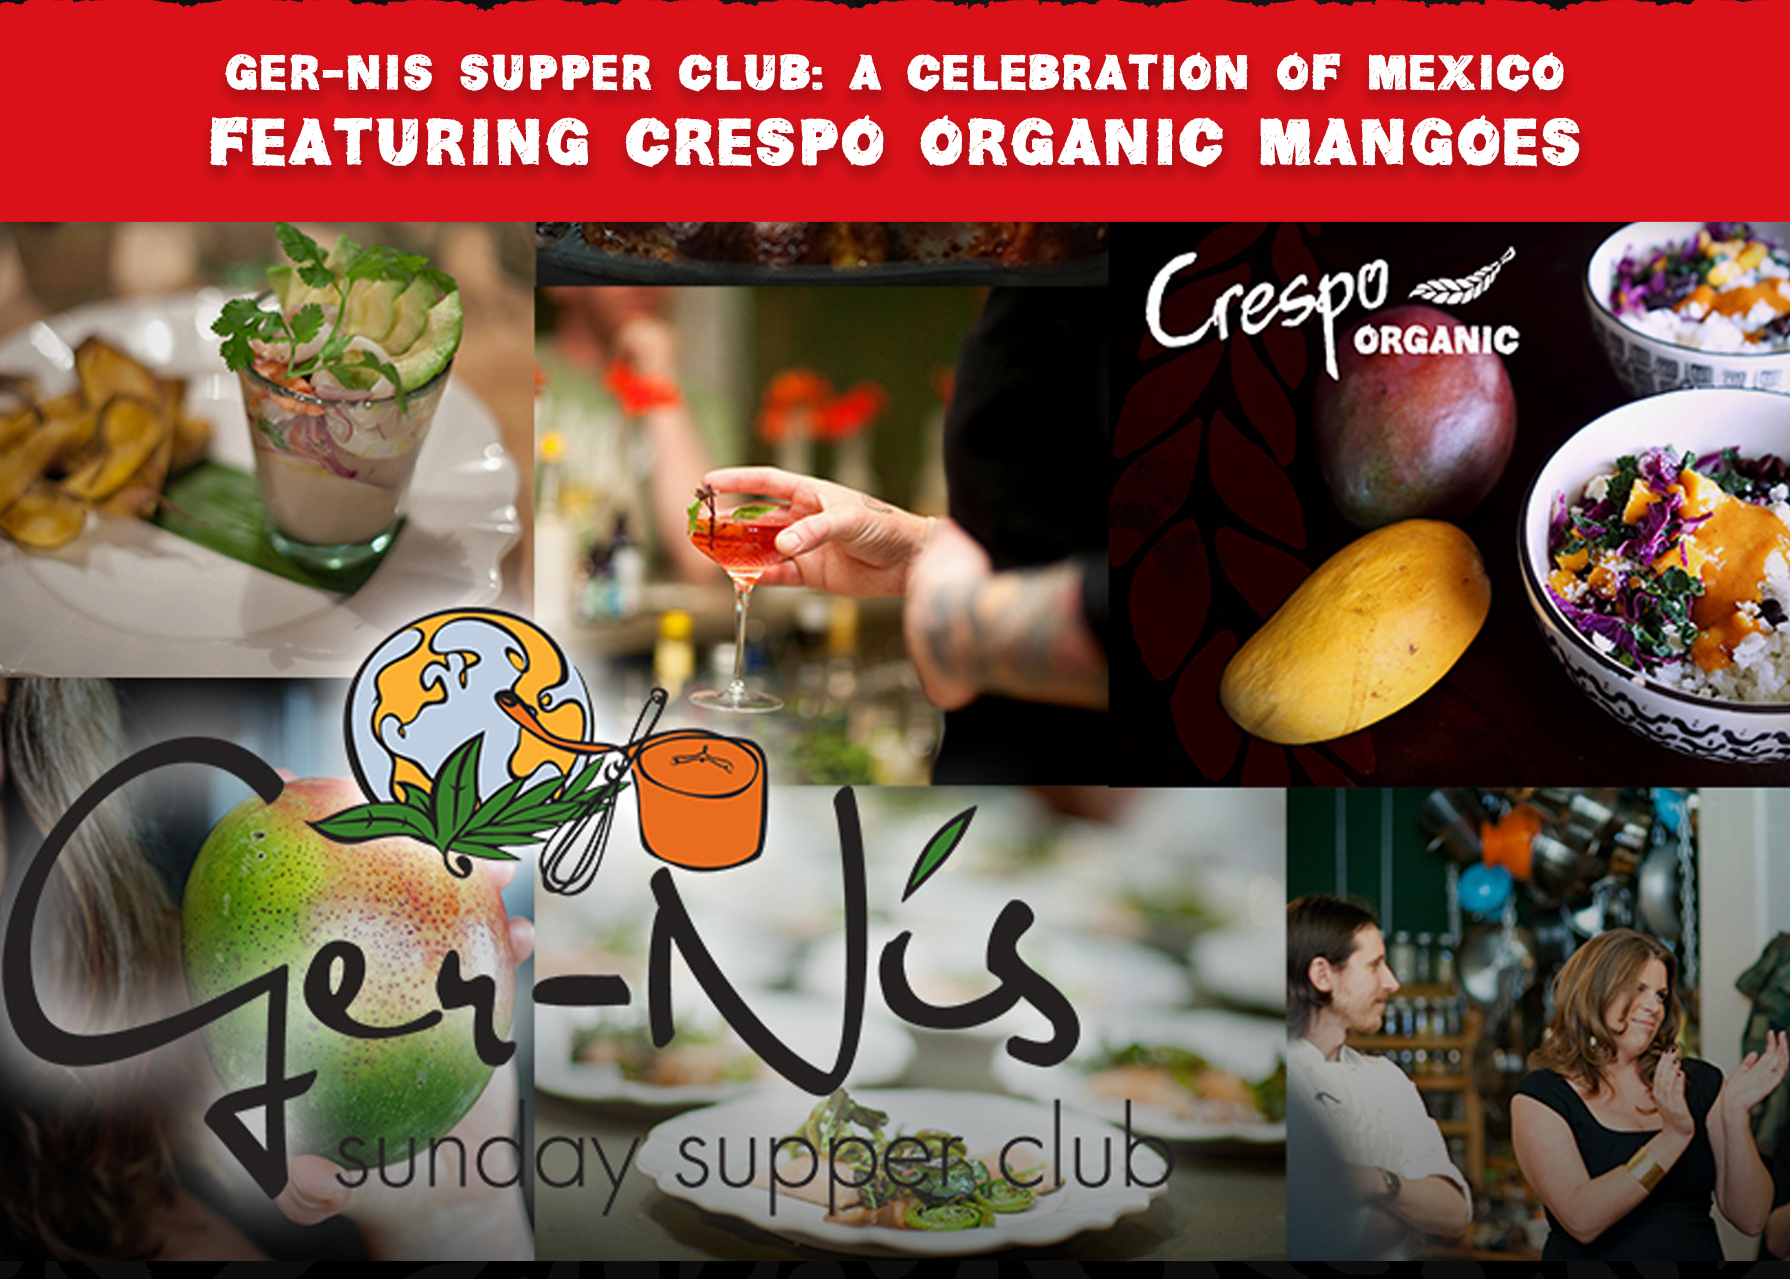 <a class="wonderplugin-gridgallery-posttitle-link" href="http://www.underthemangotree.crespoorganic.com/2021/06/26/celebrating-mexico-mangoes-with-ger-nis/" target="_blank">Celebrating Mexico & Mangoes with Ger-Nis</a>